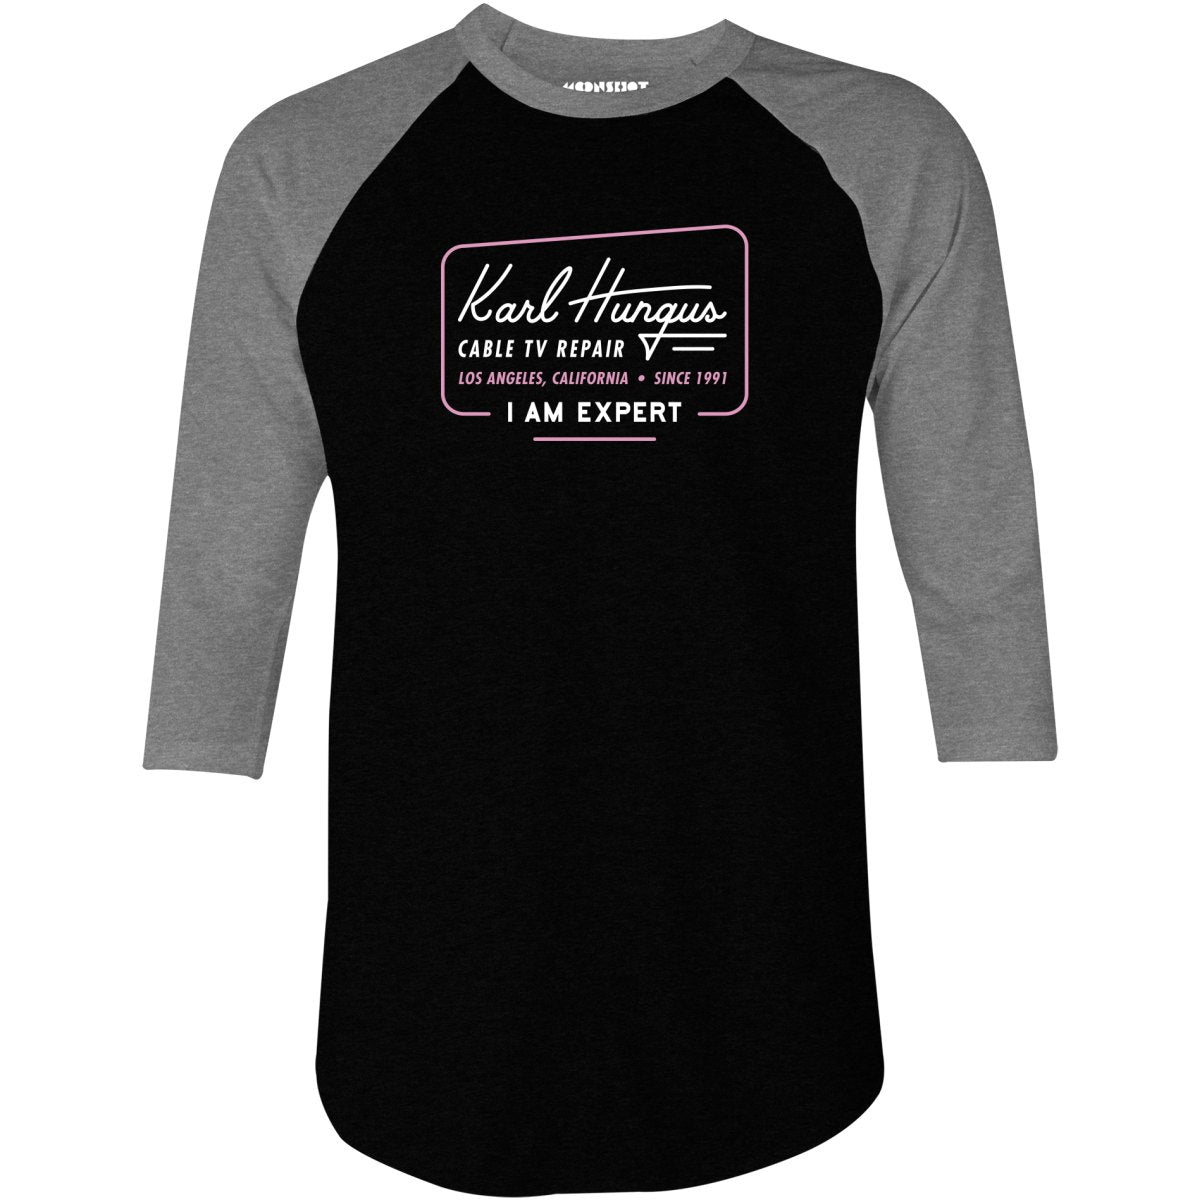 Karl Hungus Cable TV Repair - I am Expert - 3/4 Sleeve Raglan T-Shirt